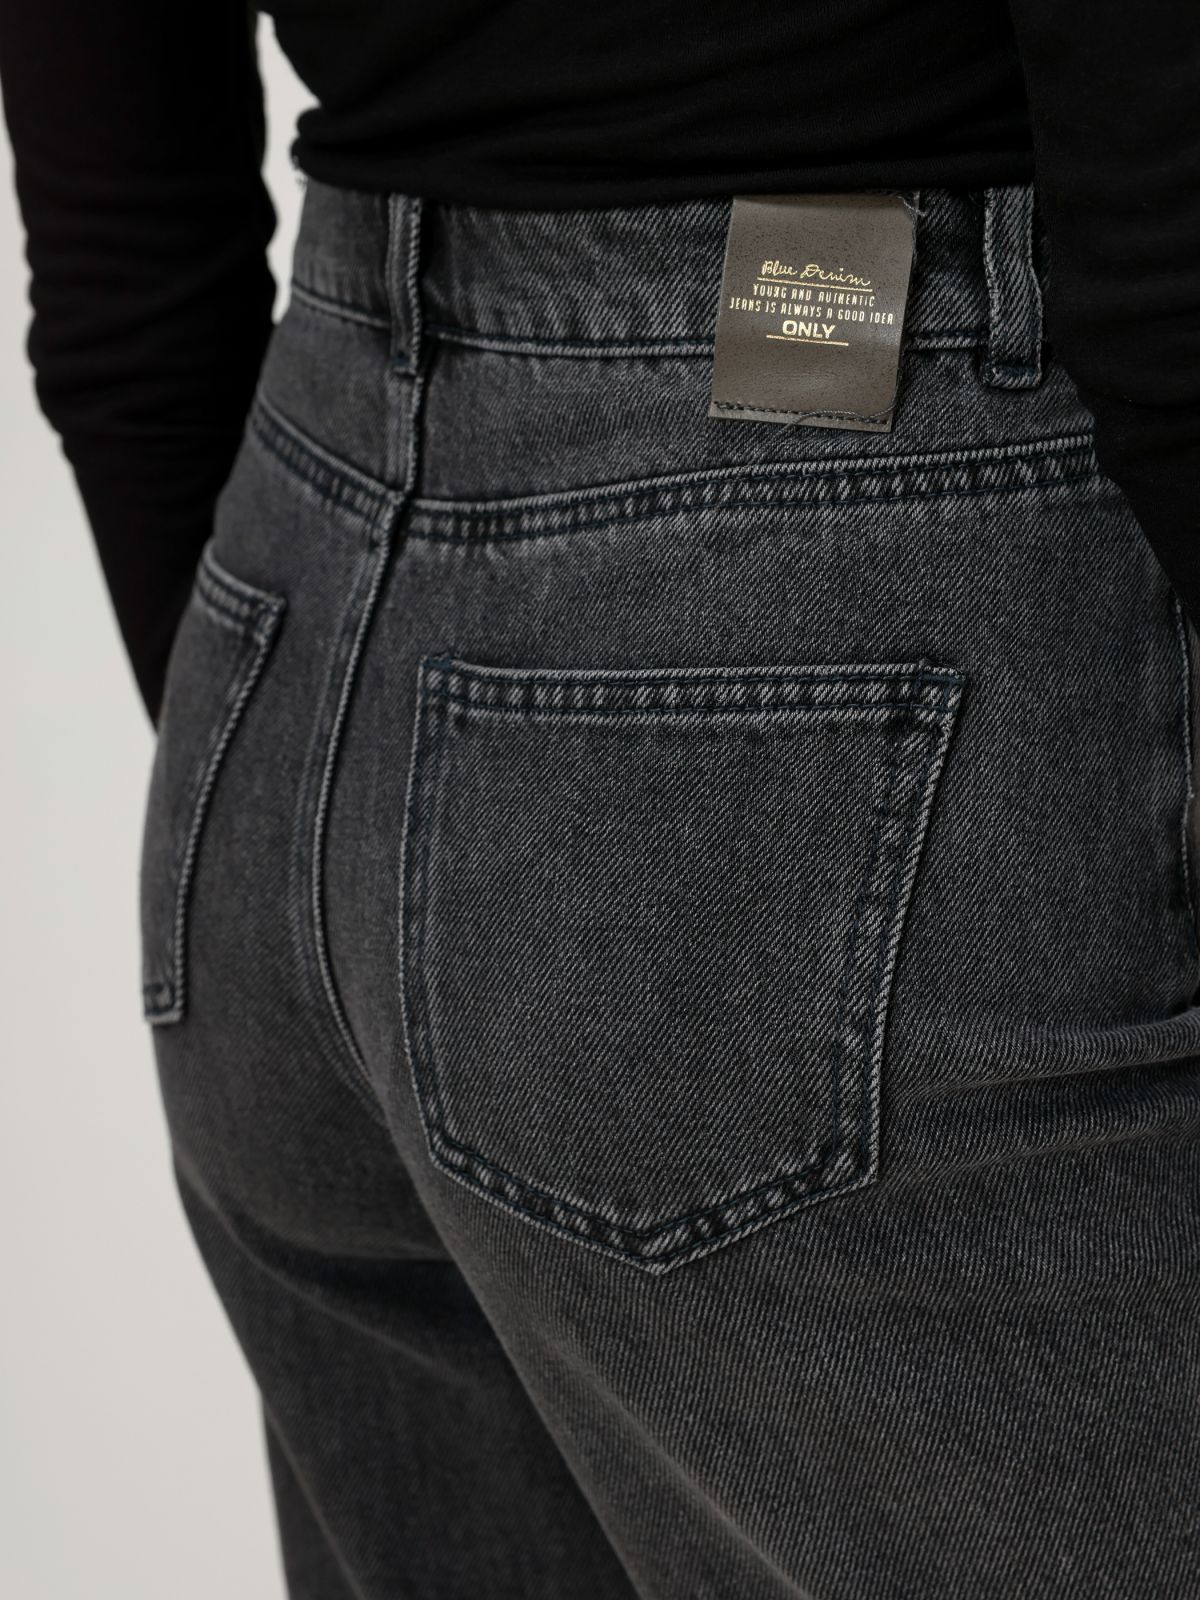  ג'ינס ווש בגזרה ישרה / נשים של ONLY